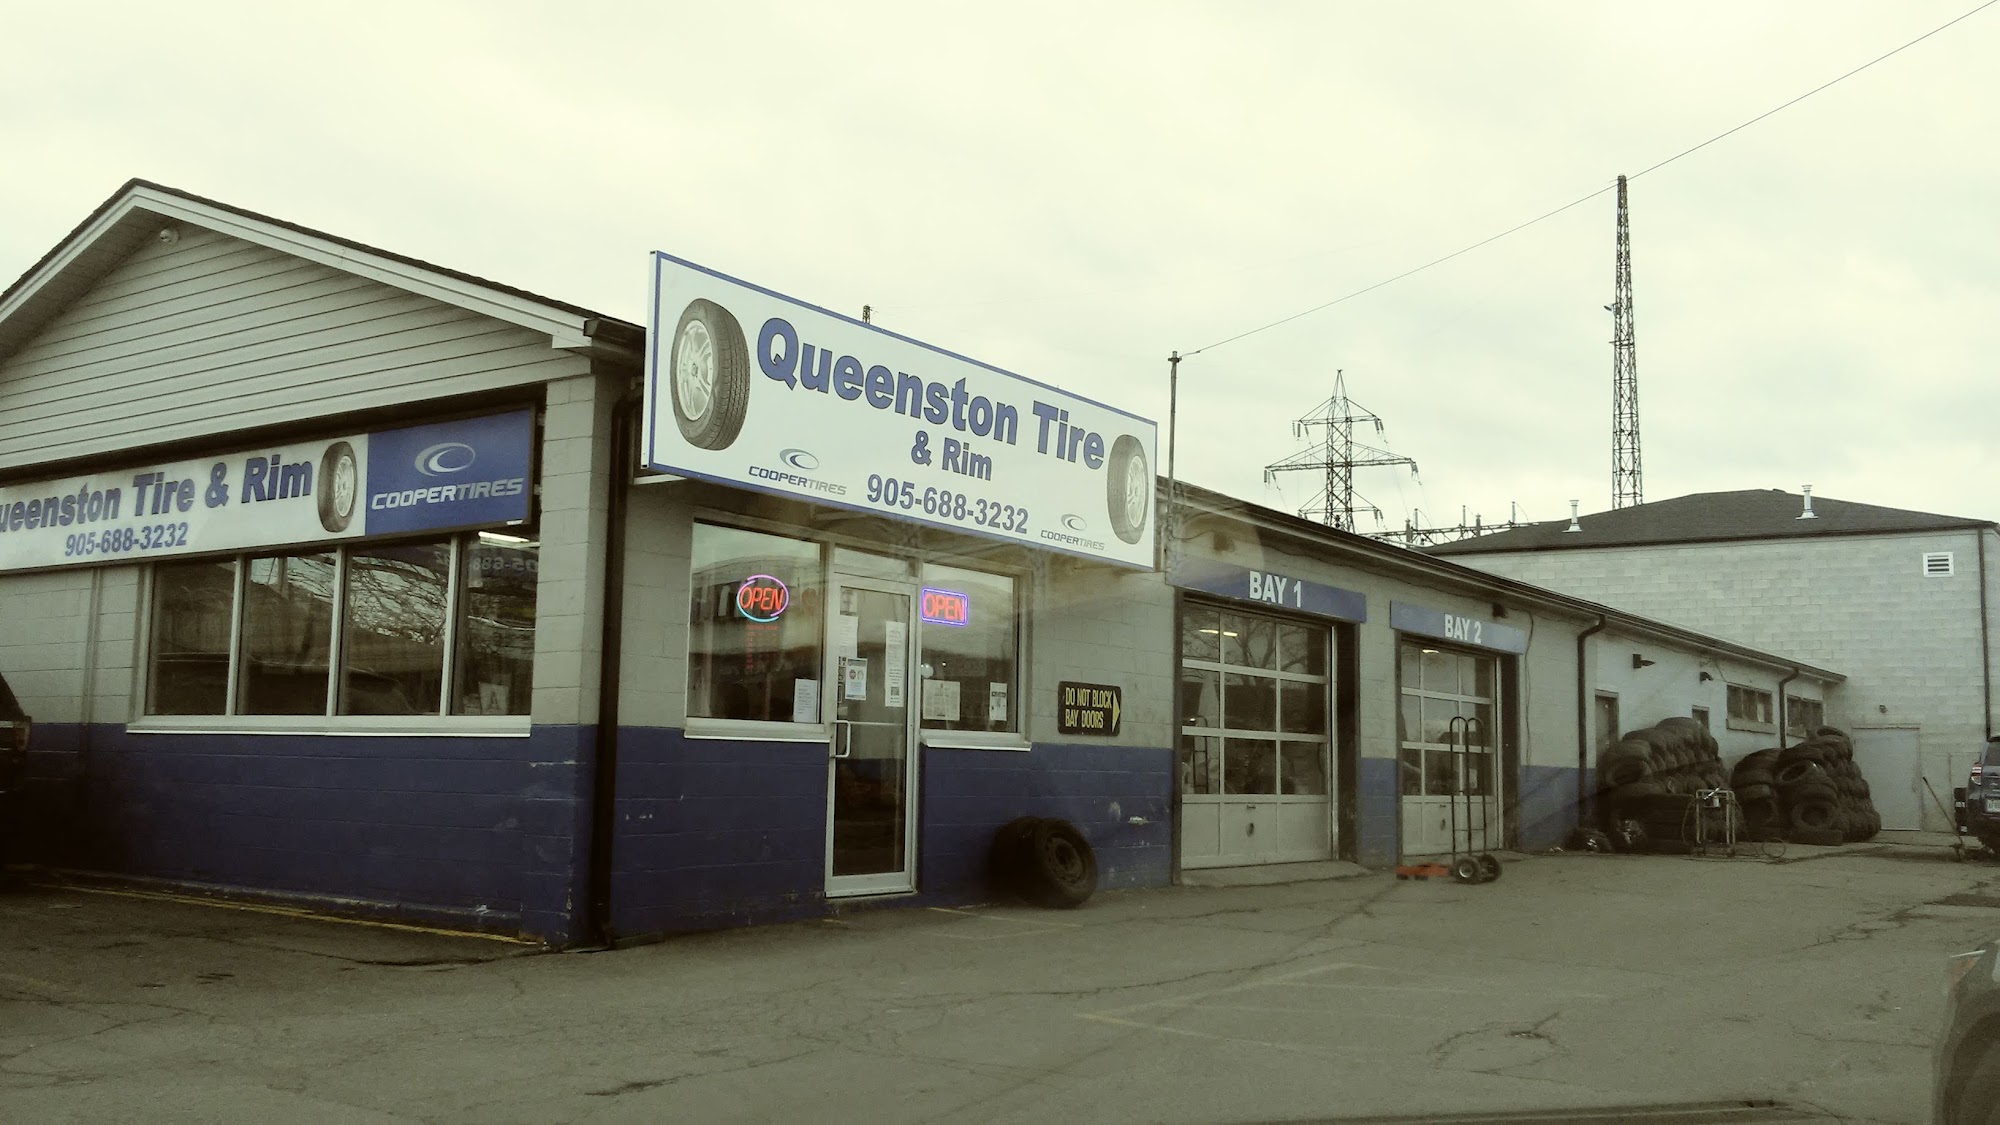 Queenston Tire & Rim